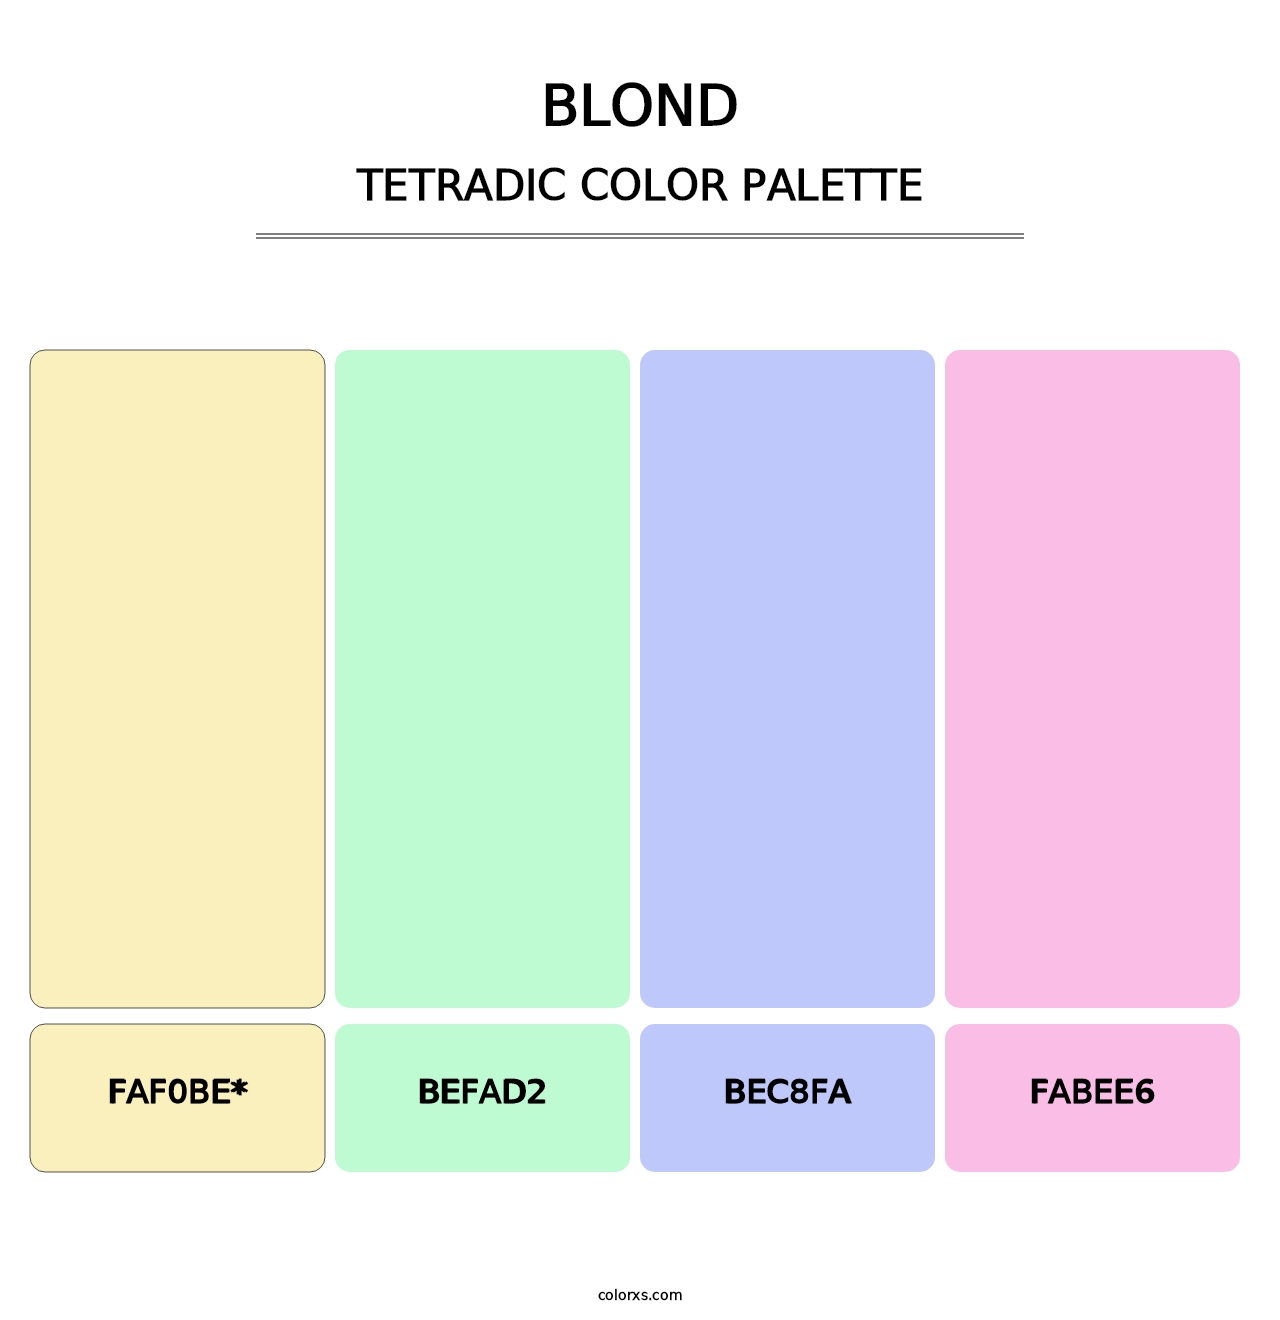 Blond - Tetradic Color Palette